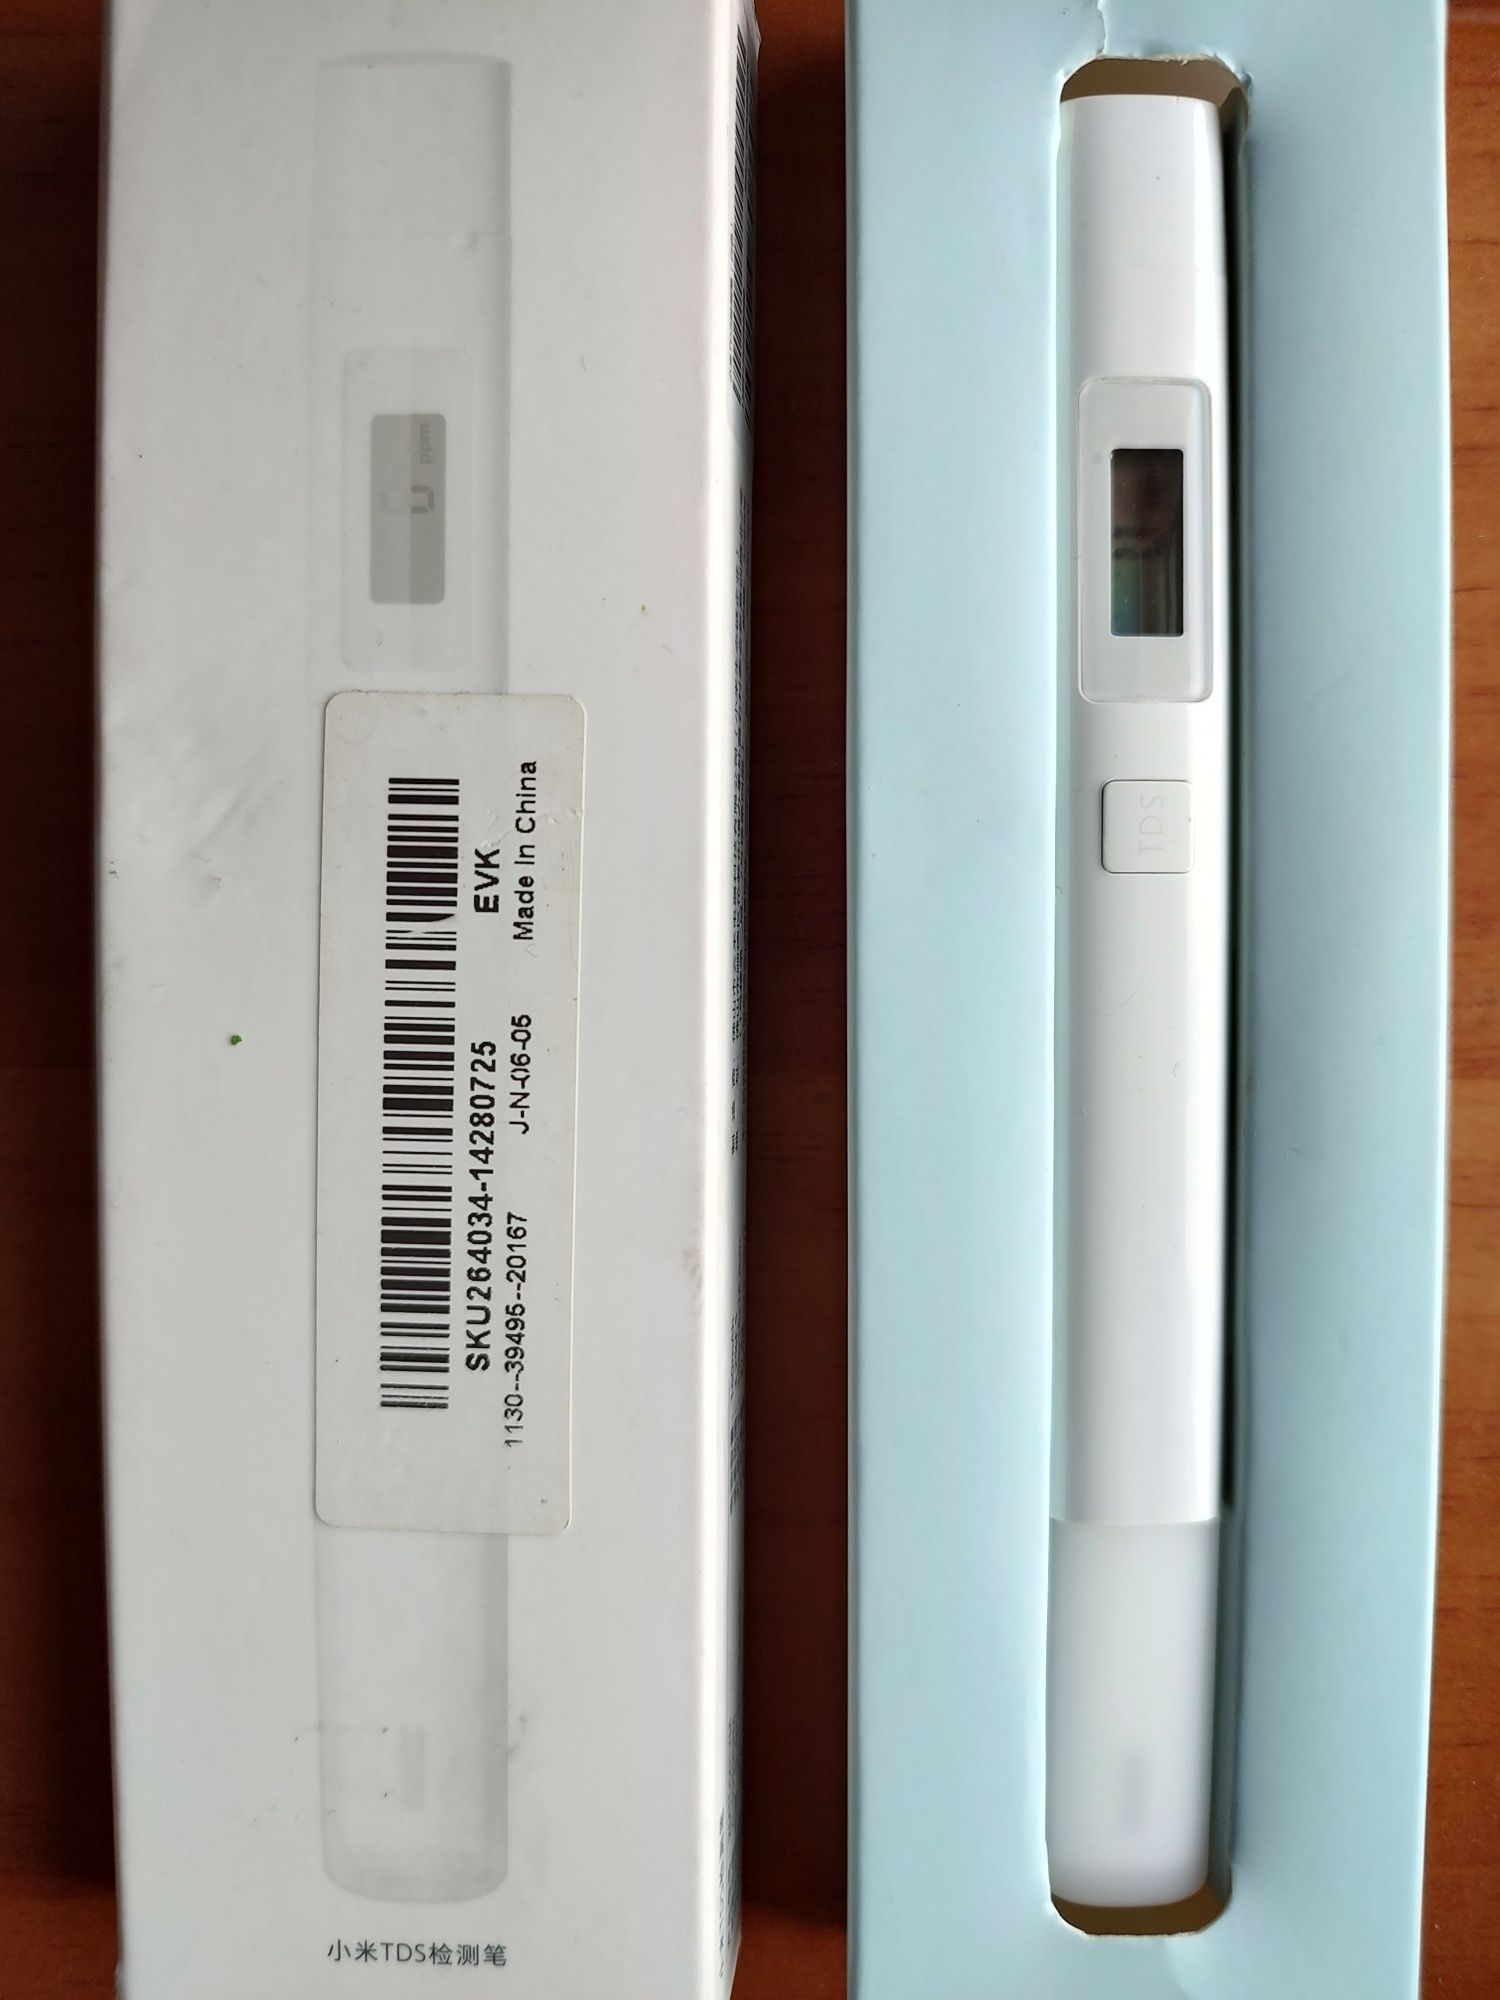 Aparat de masurat puritatea apei Xiaomi Mi TDS